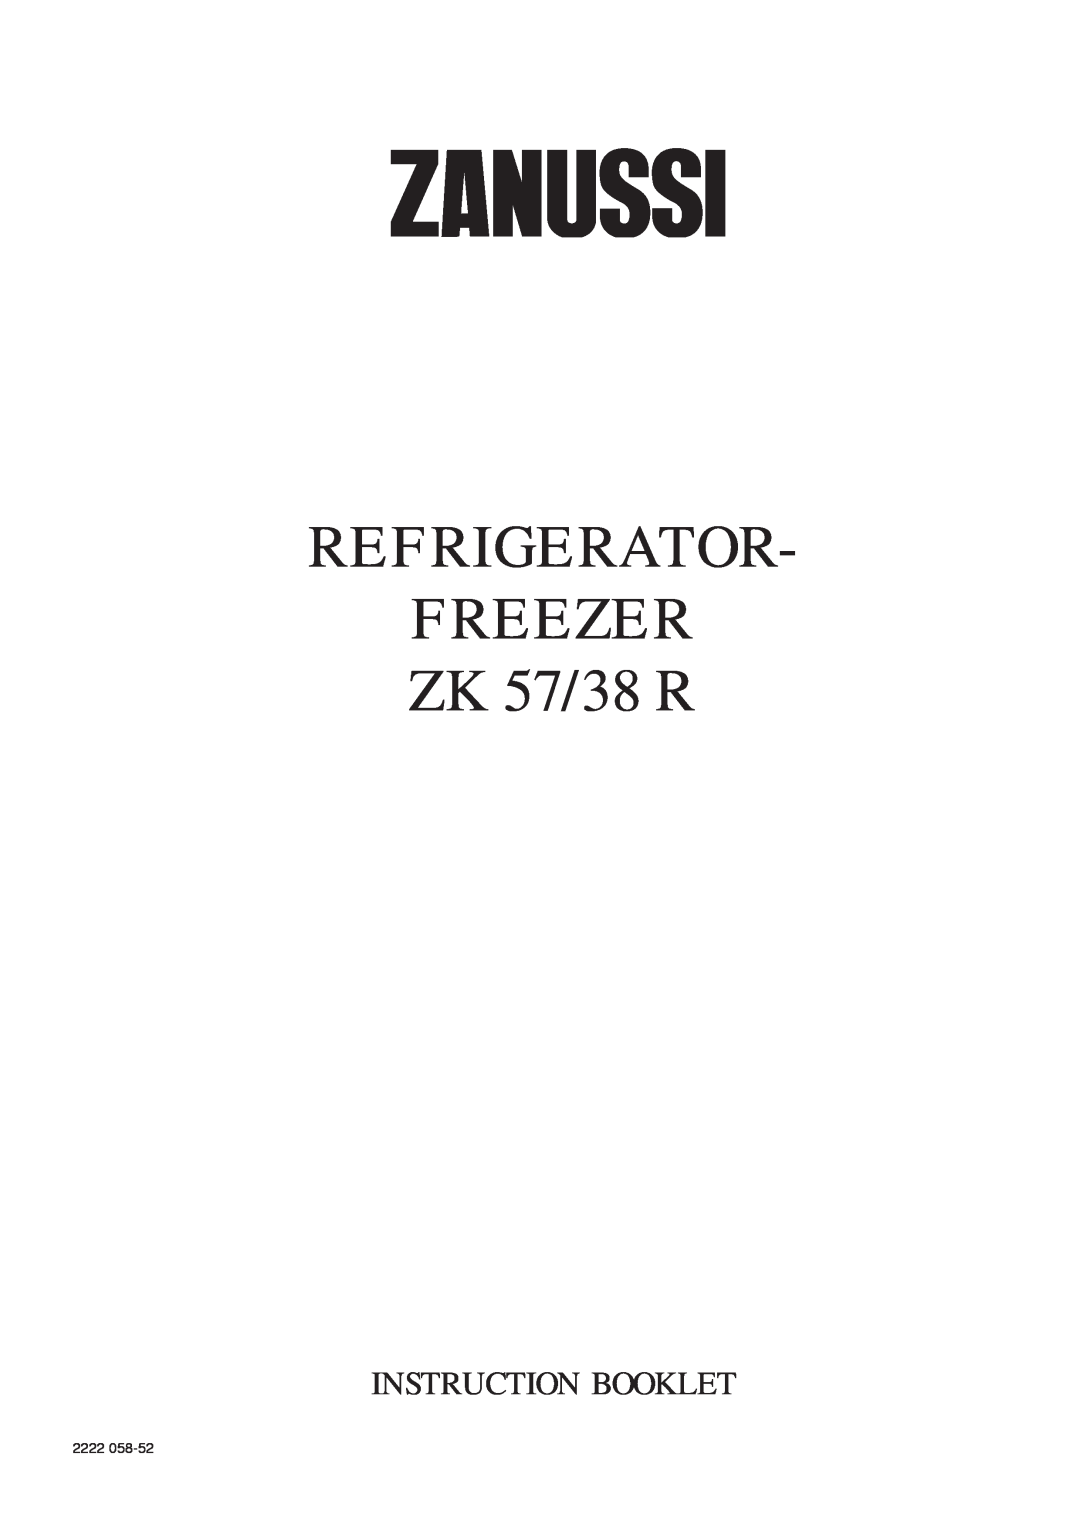 Zanussi manual REFRIGERATOR FREEZER ZK 57/38 R, Instruction Booklet, 2222 